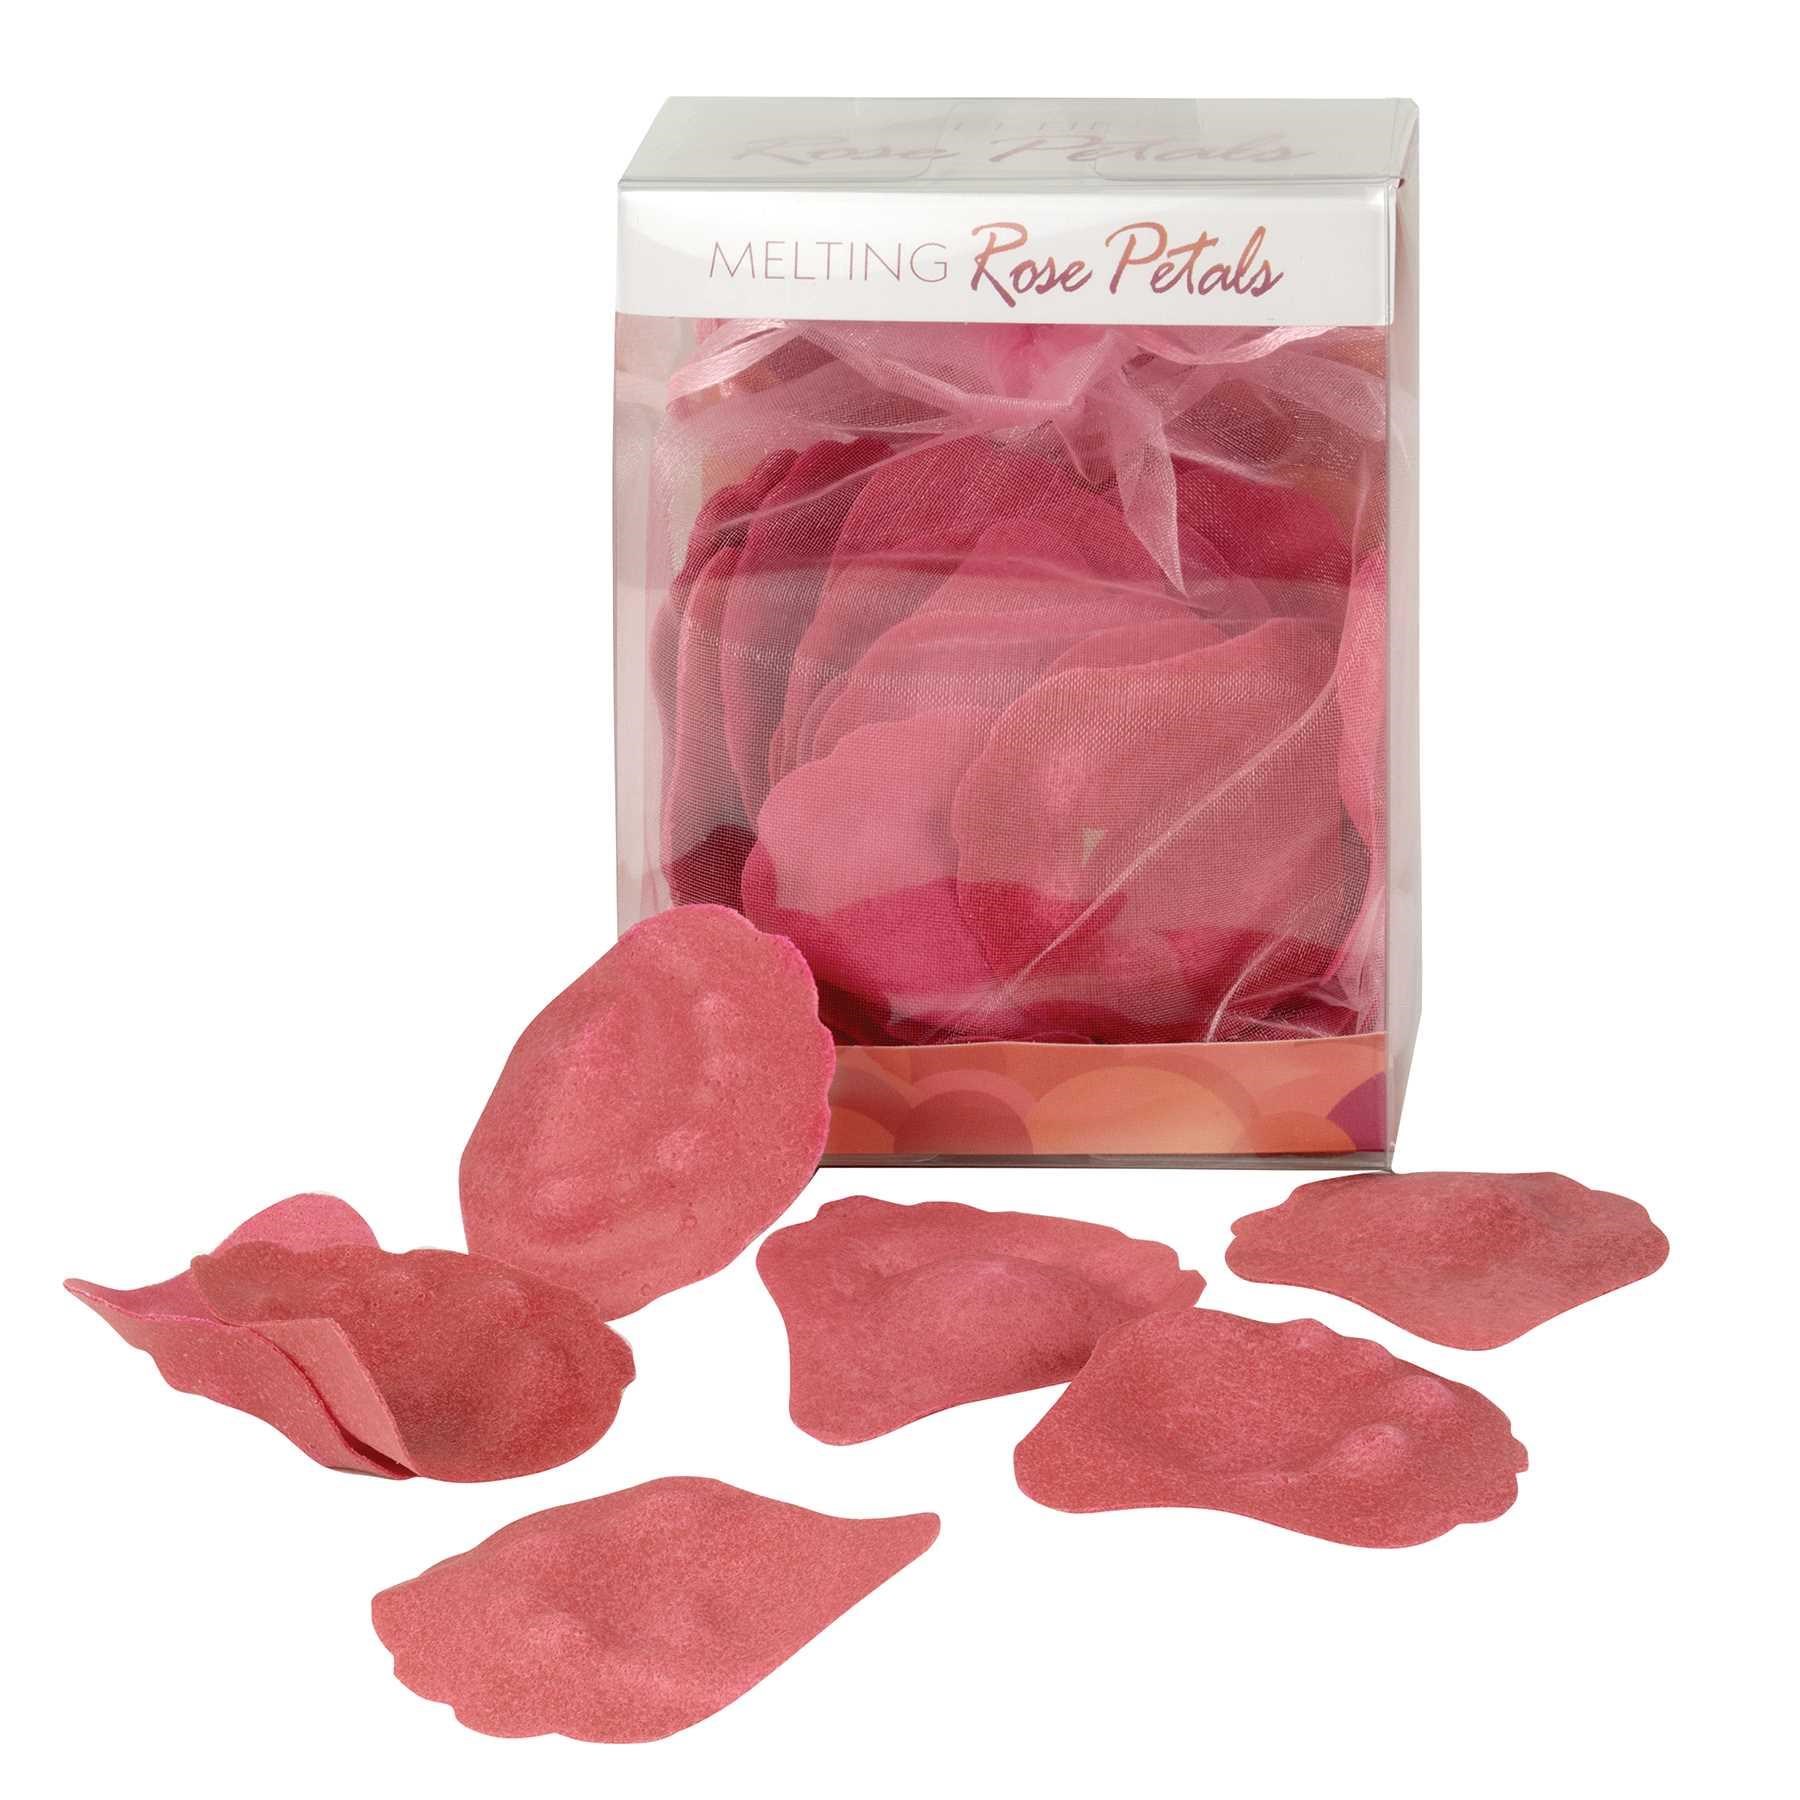 Melting Rose Scented Petals - For Bath or Romance, or Both - 1.4 oz Bag